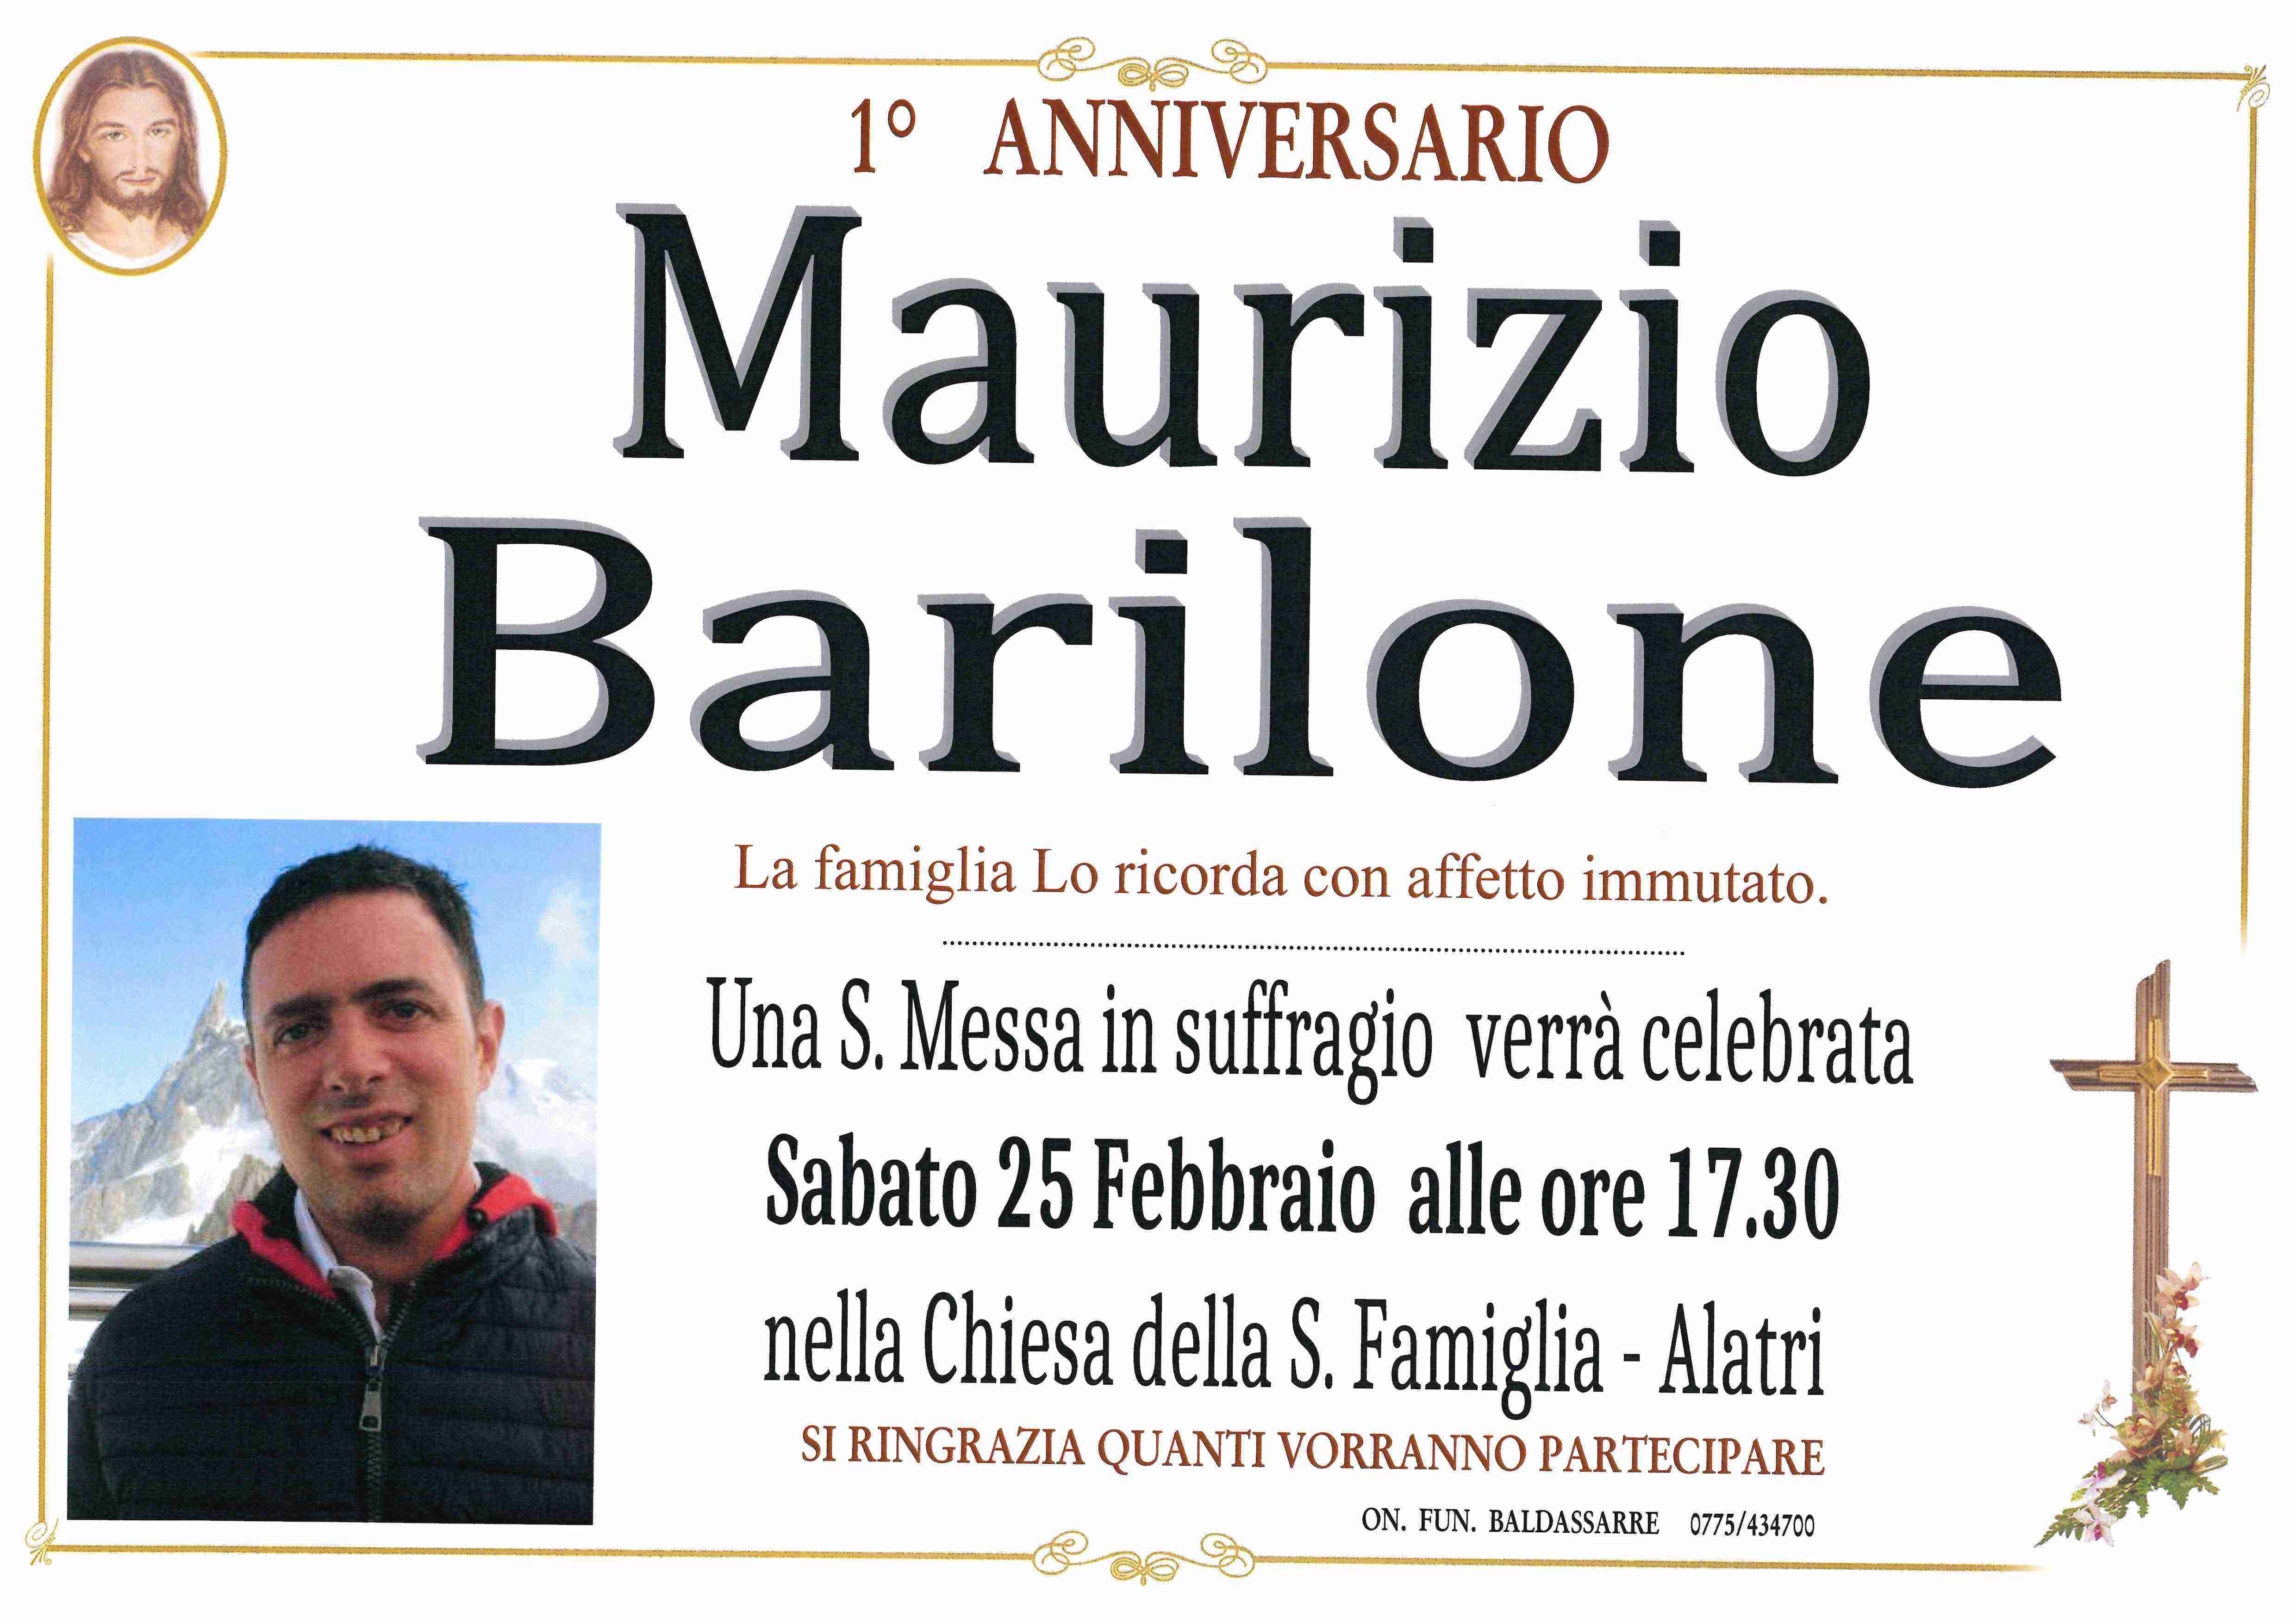 Maurizio Barilone